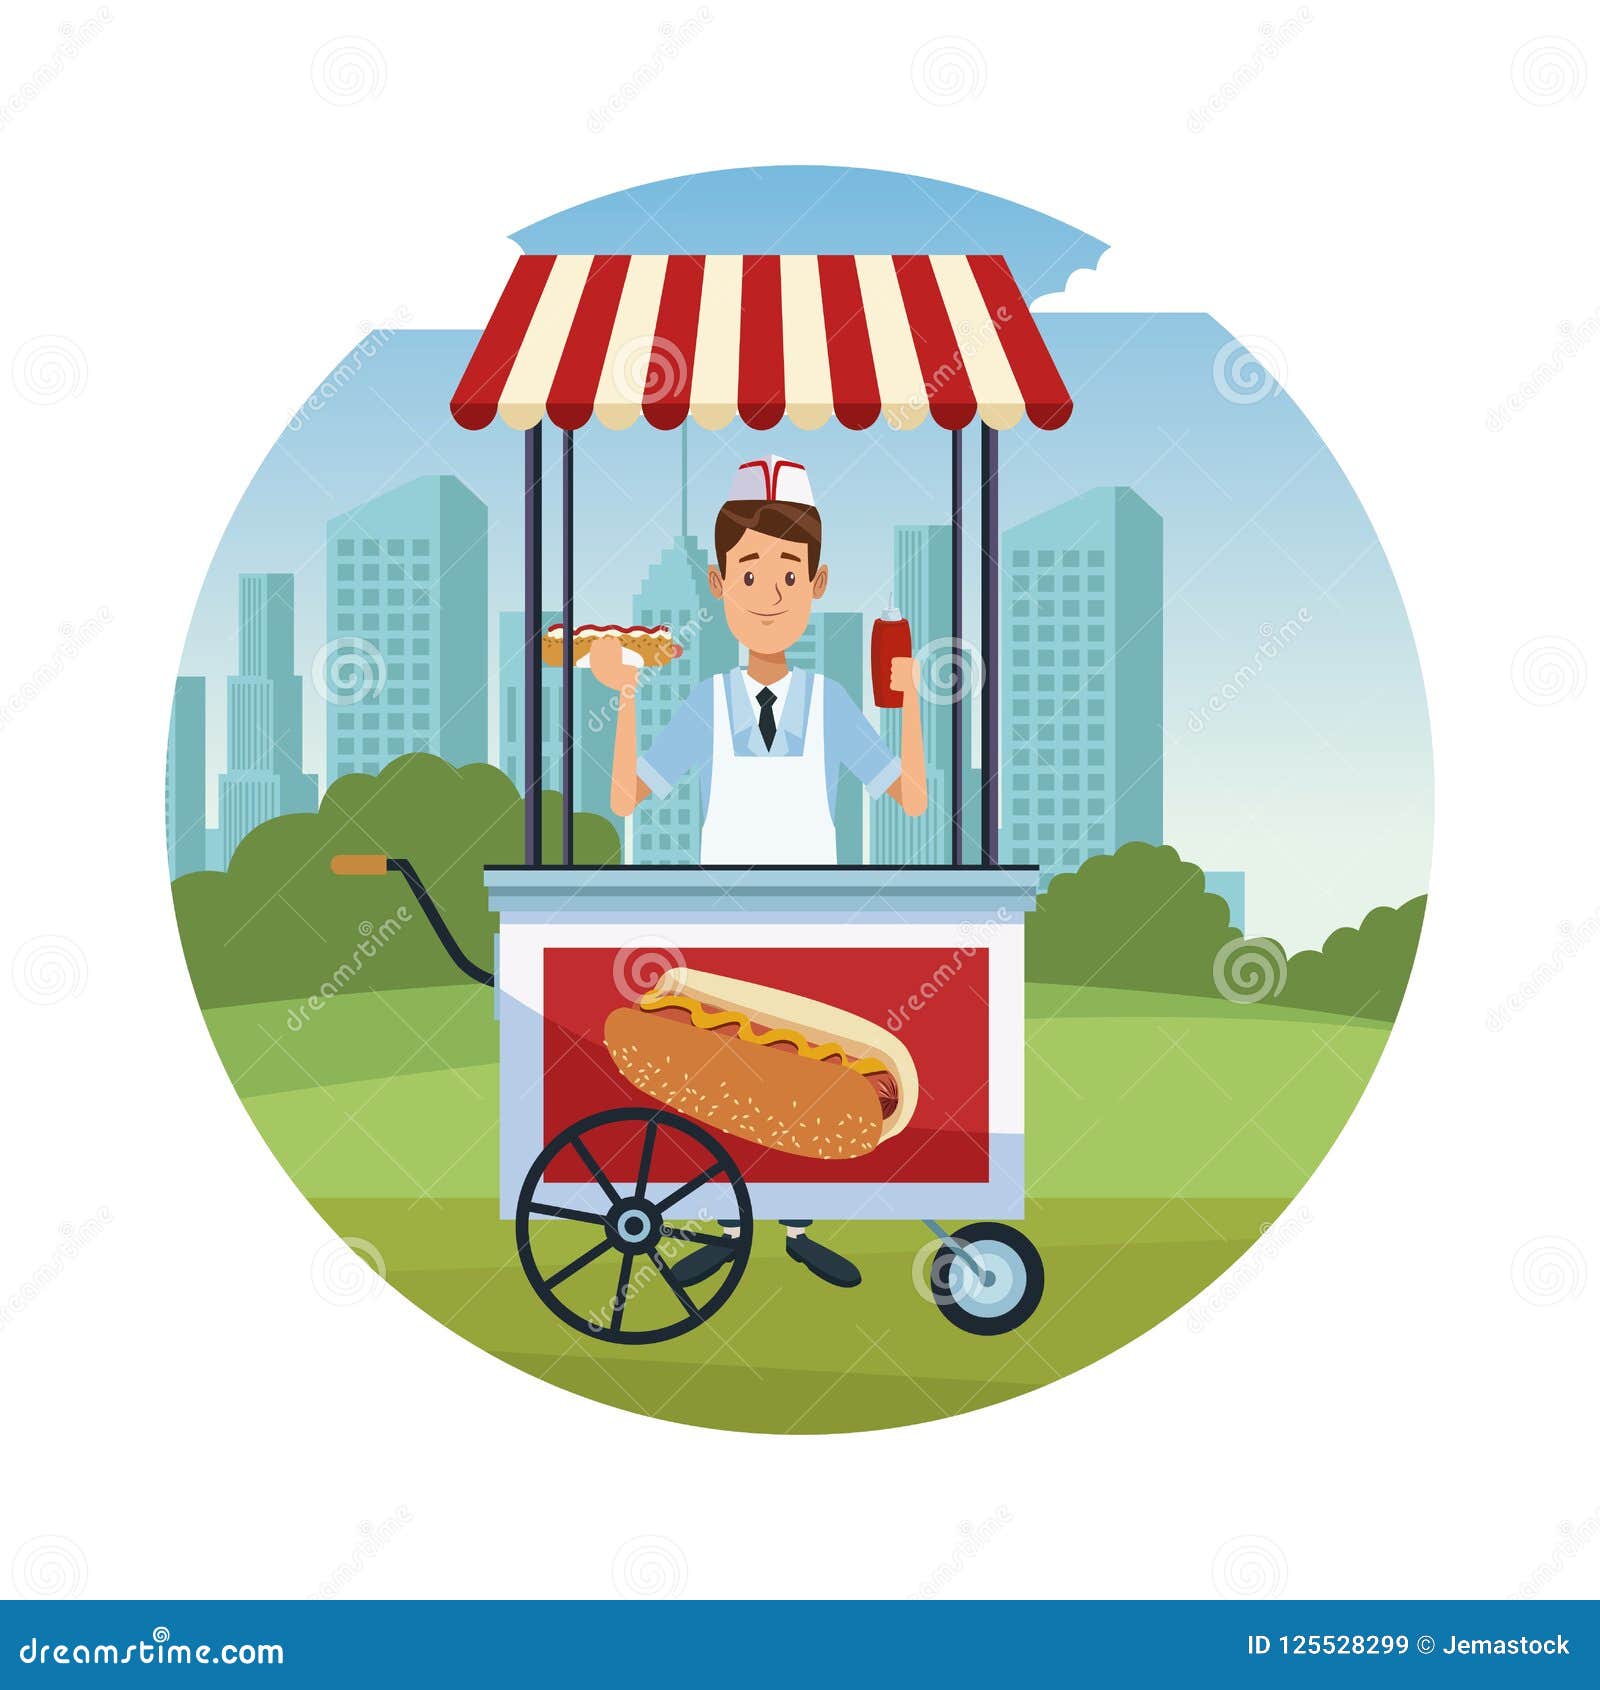 Hot Dog Stand Cartoon